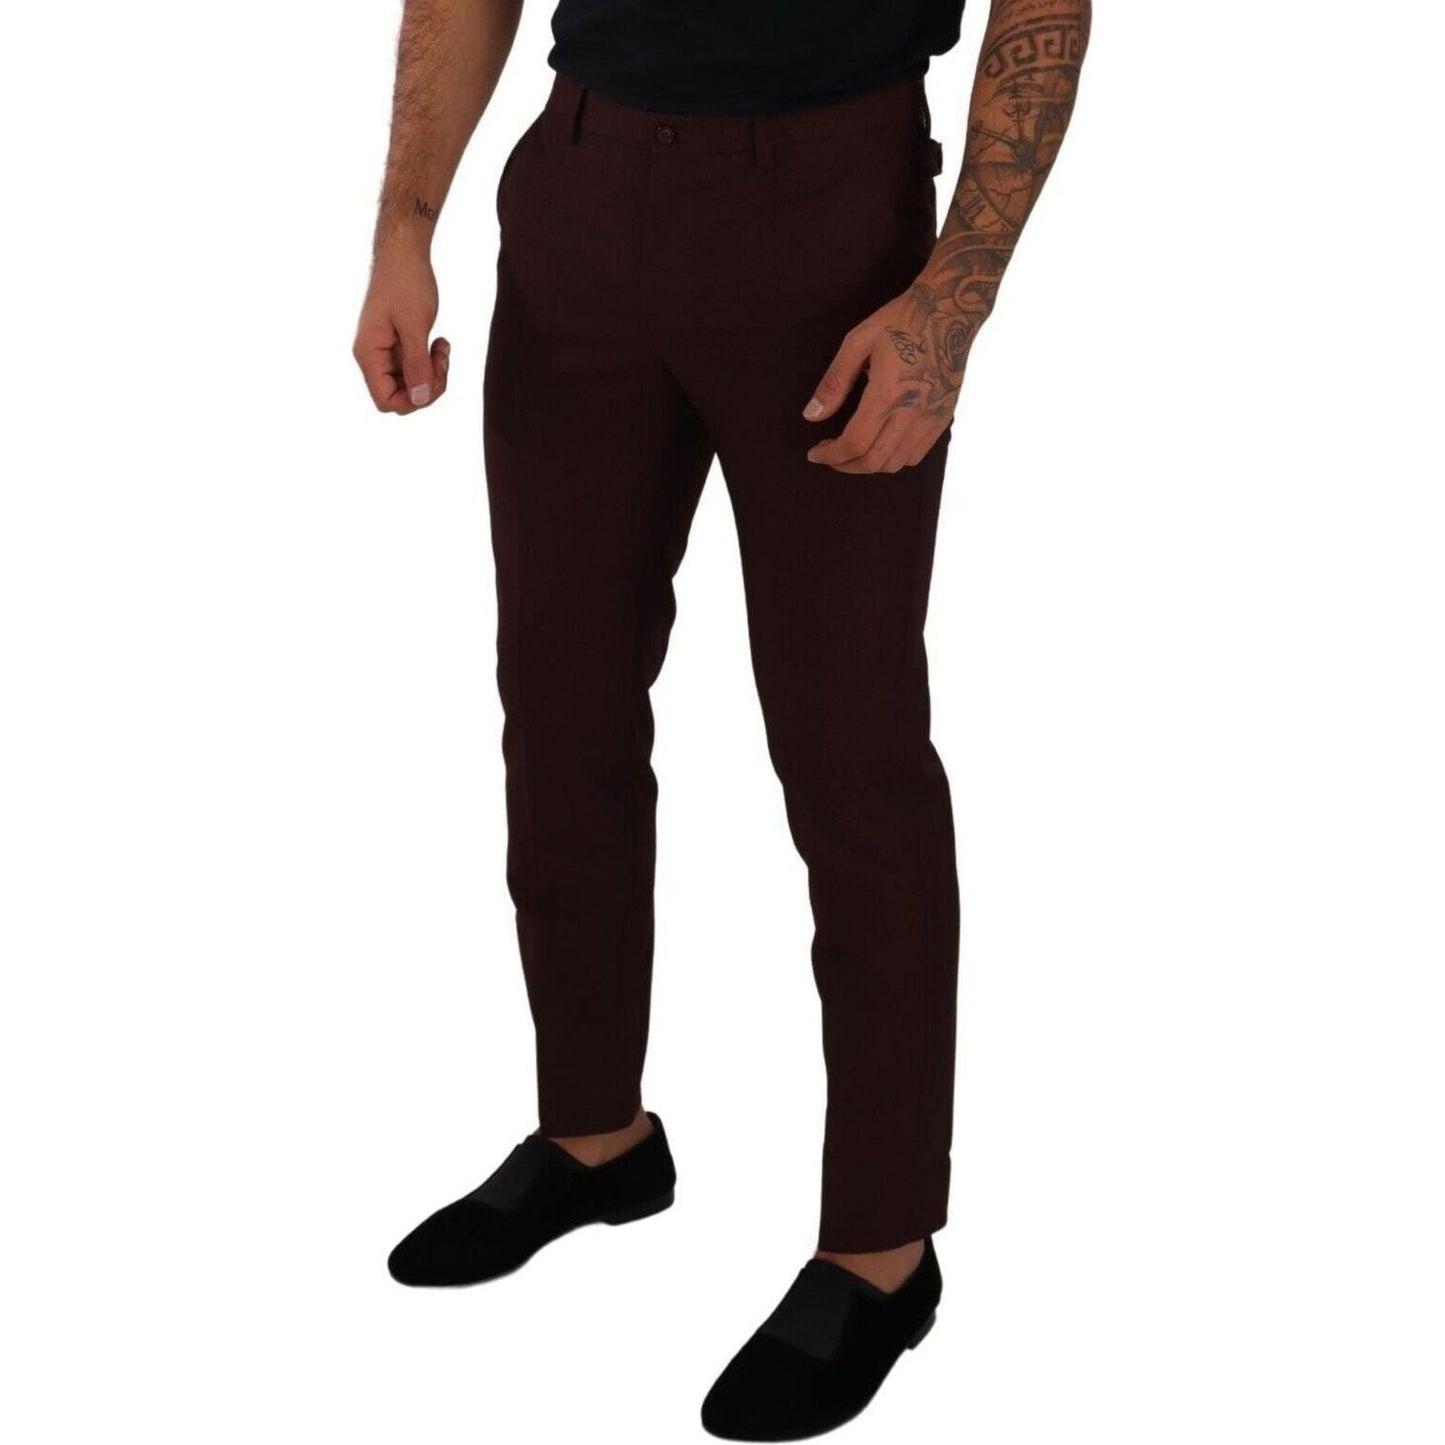 Dolce & Gabbana Maroon Slim Fit Dress Pants maroon-bordeaux-skinny-slim-trouser-pants